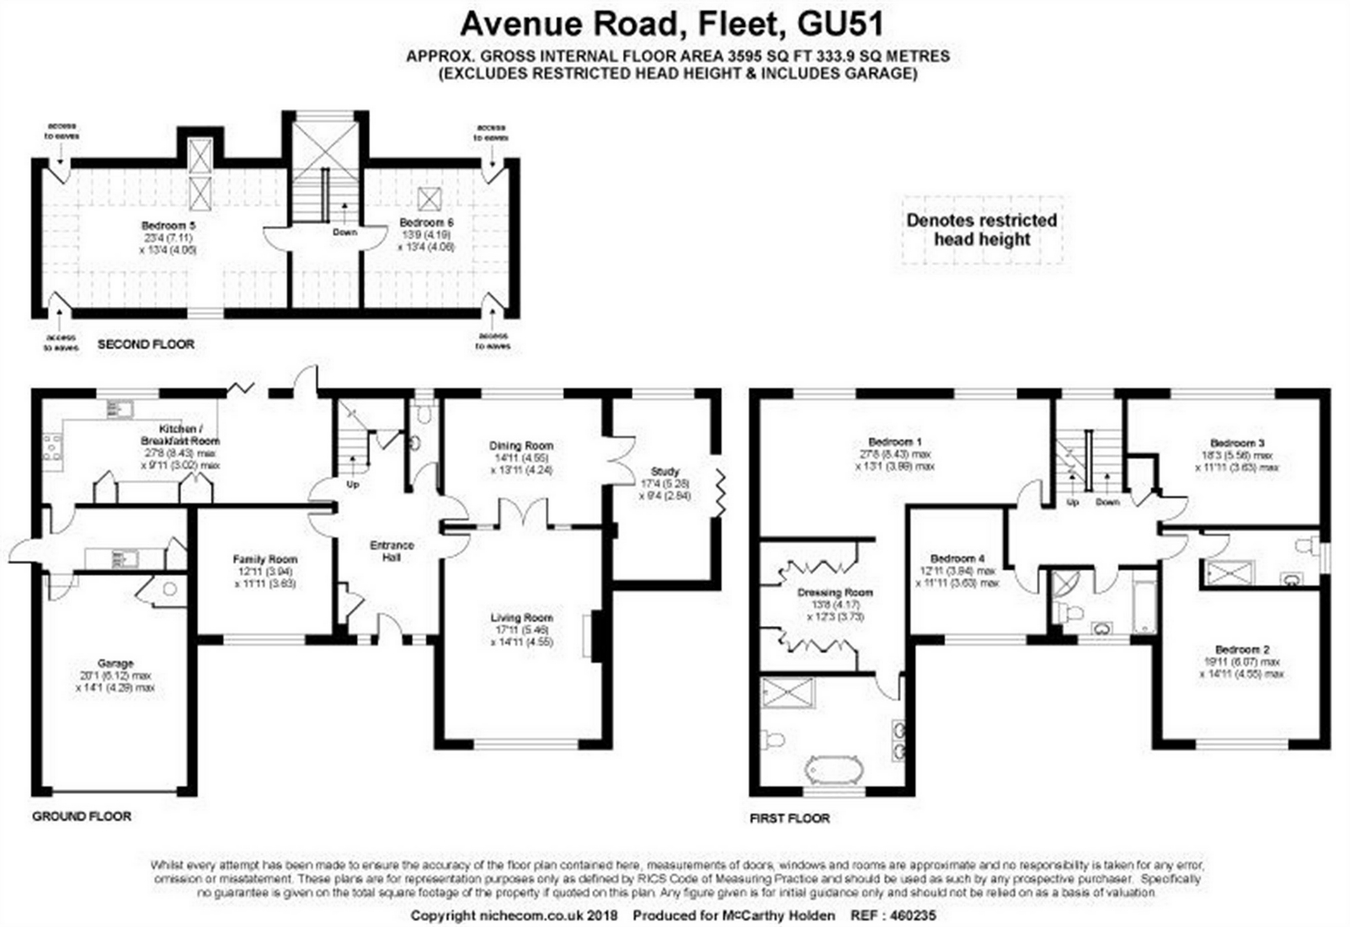 6 Bedrooms Detached house for sale in Avenue Road, Fleet GU51